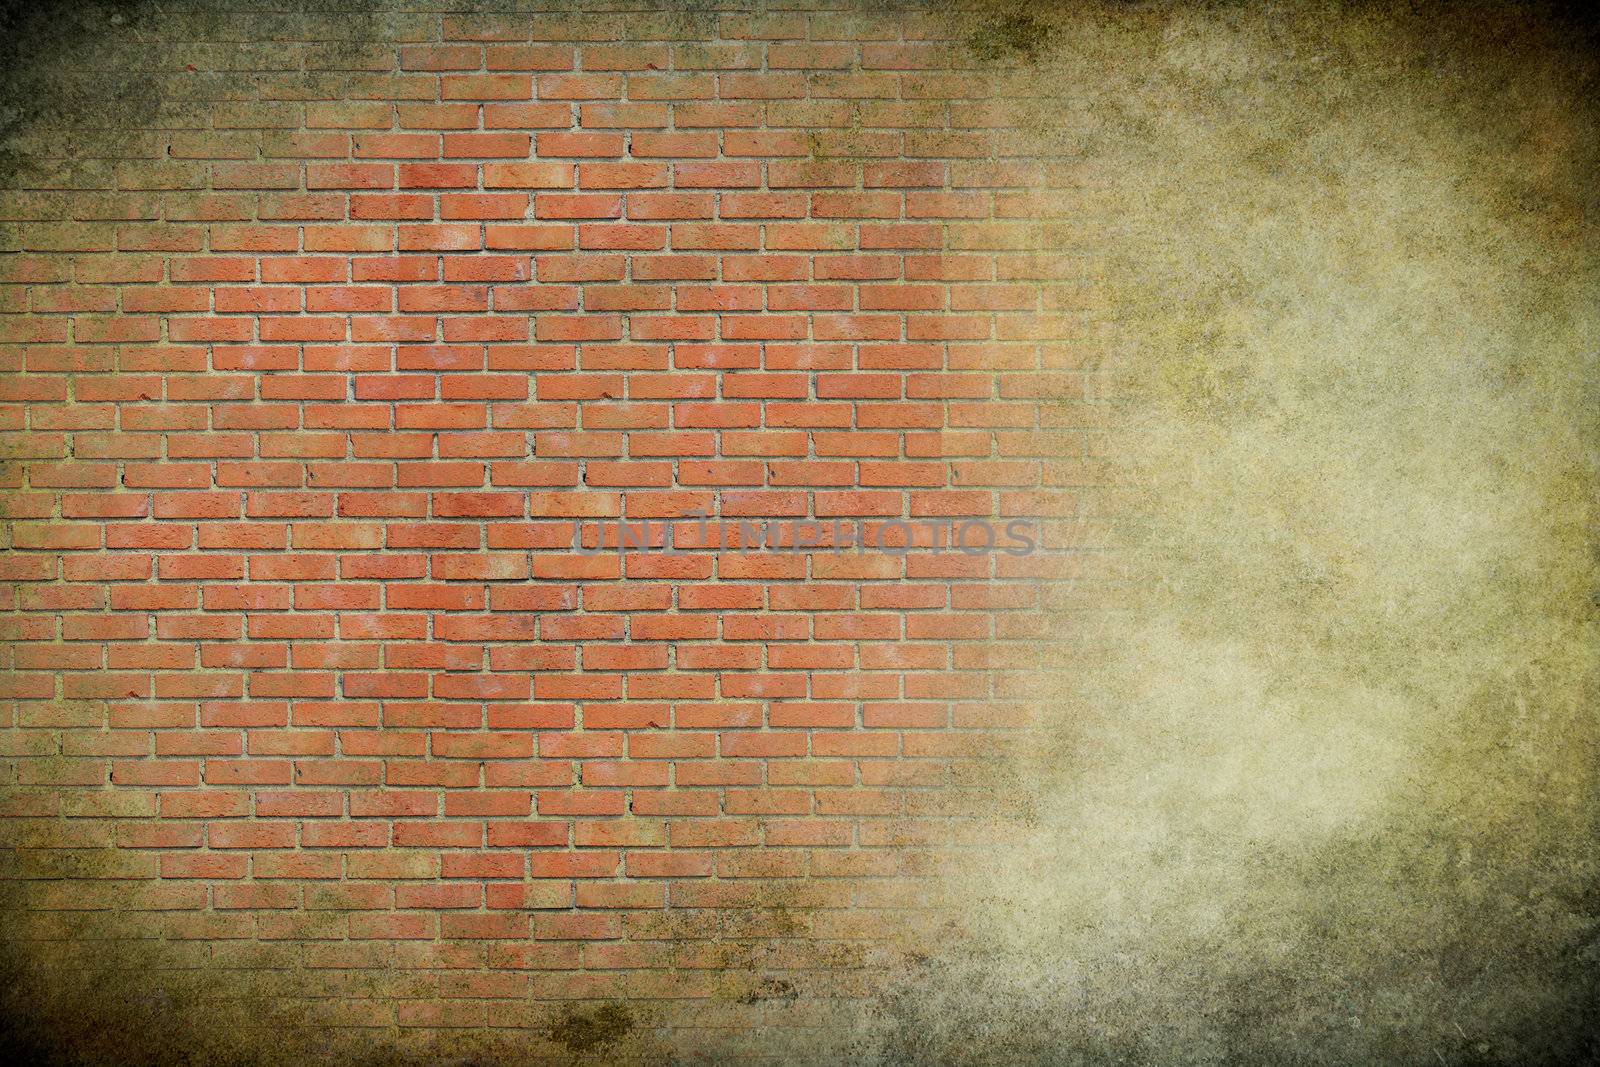 Brick wall on a grunge background by petrkurgan